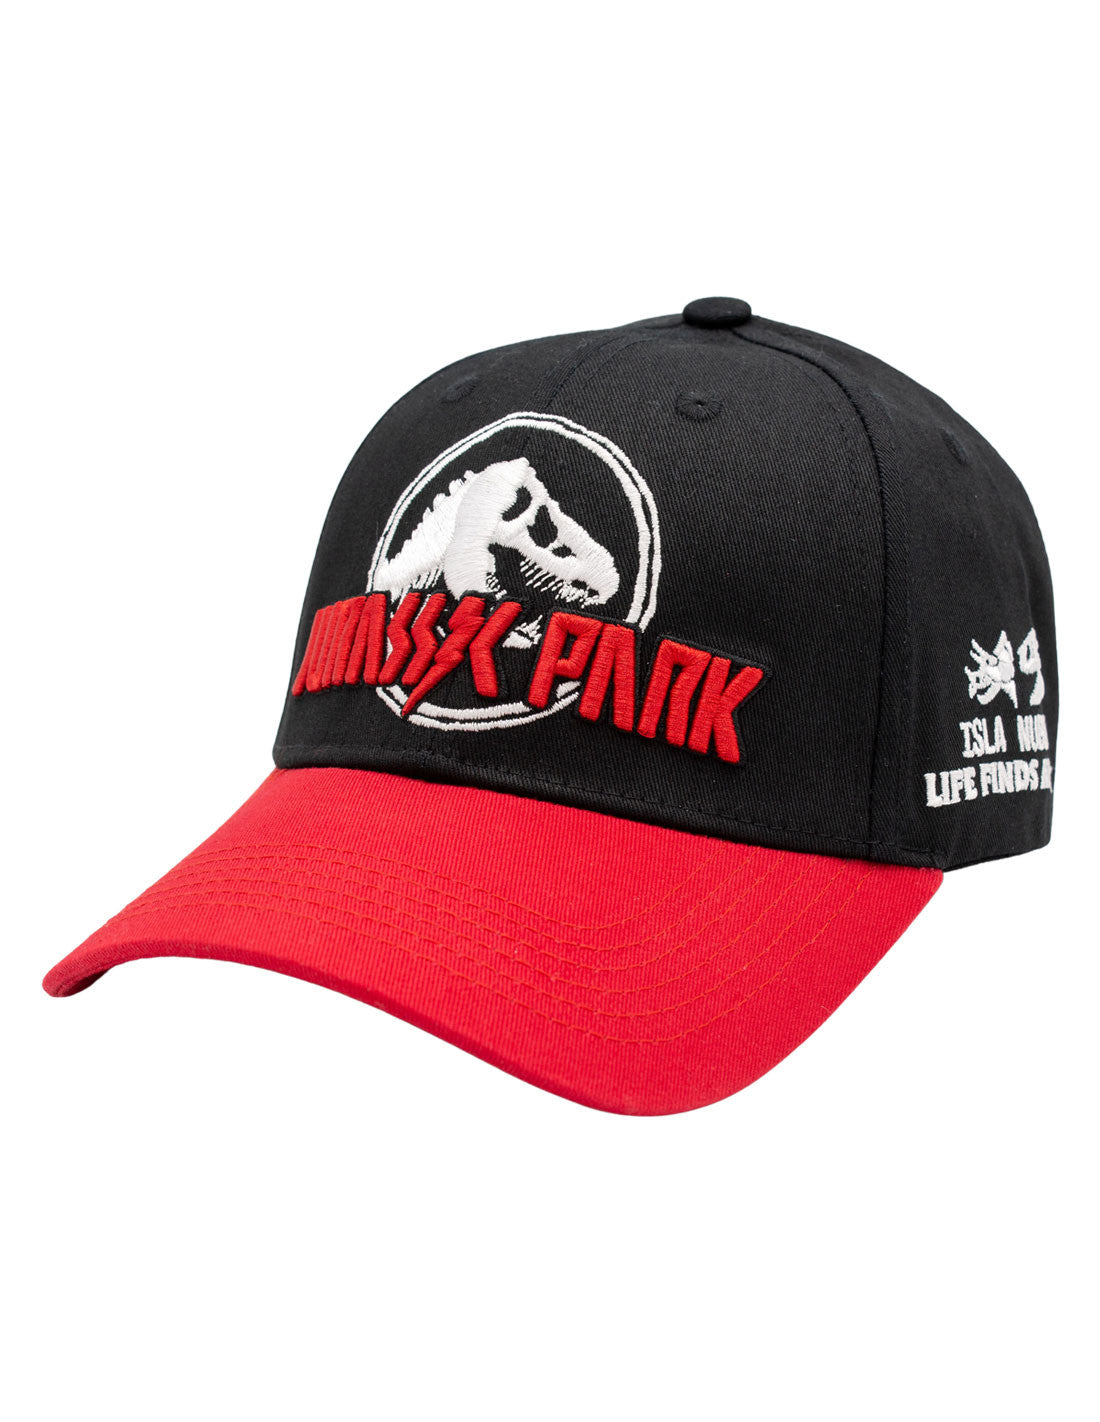 Jurassic Park Cap - Jurassic Park Rock